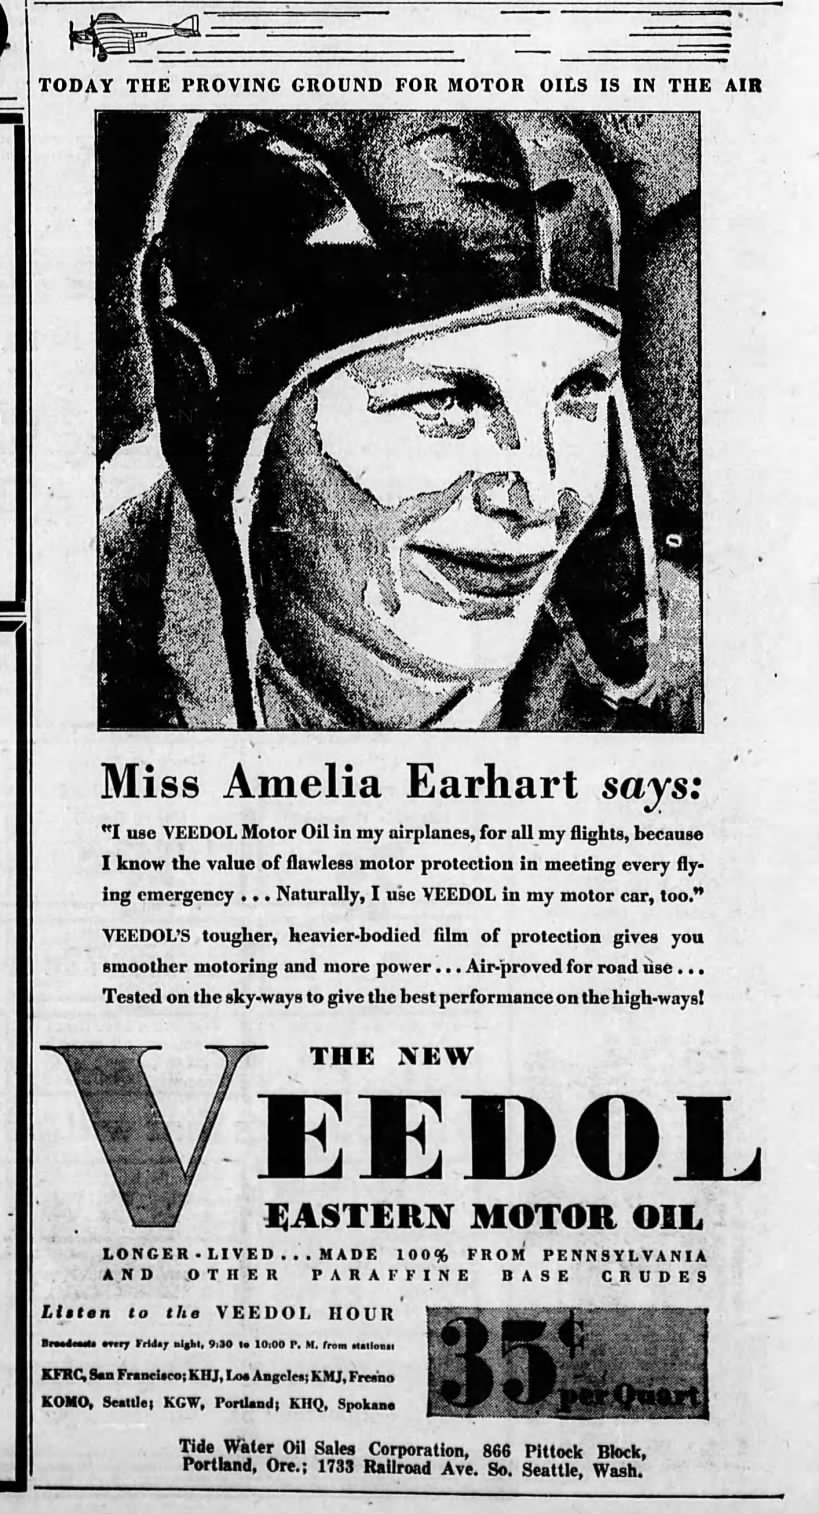 Amelia Earhart used to promote motor oil